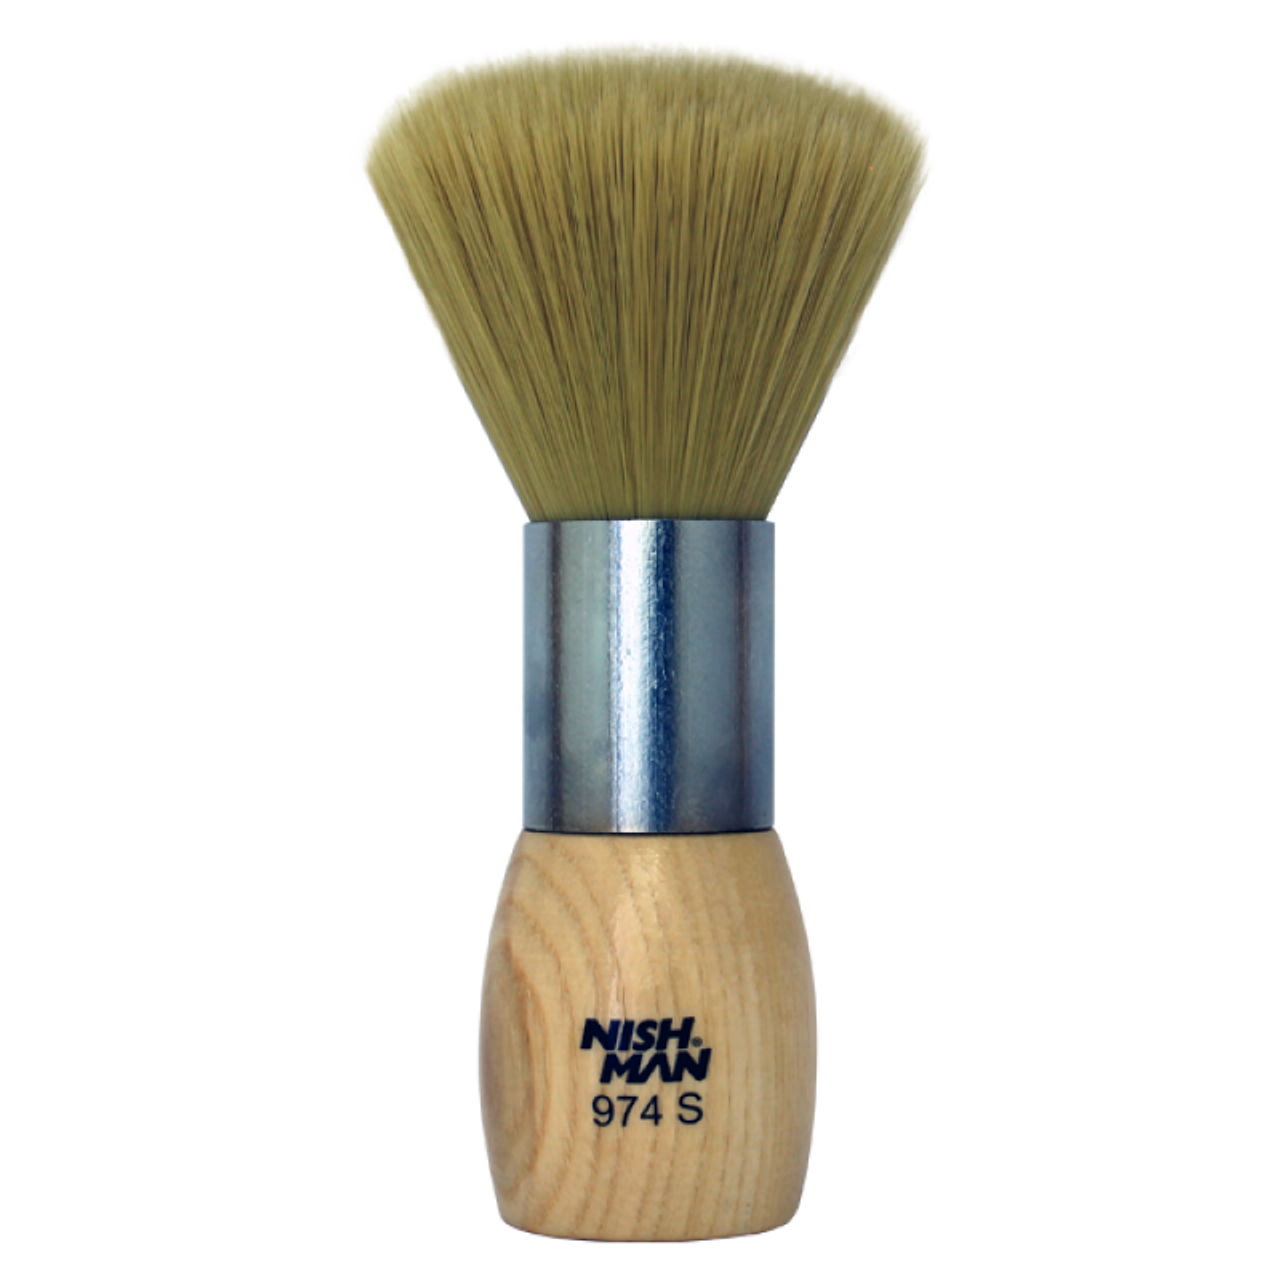 Nishman Neck Brush No. 974S